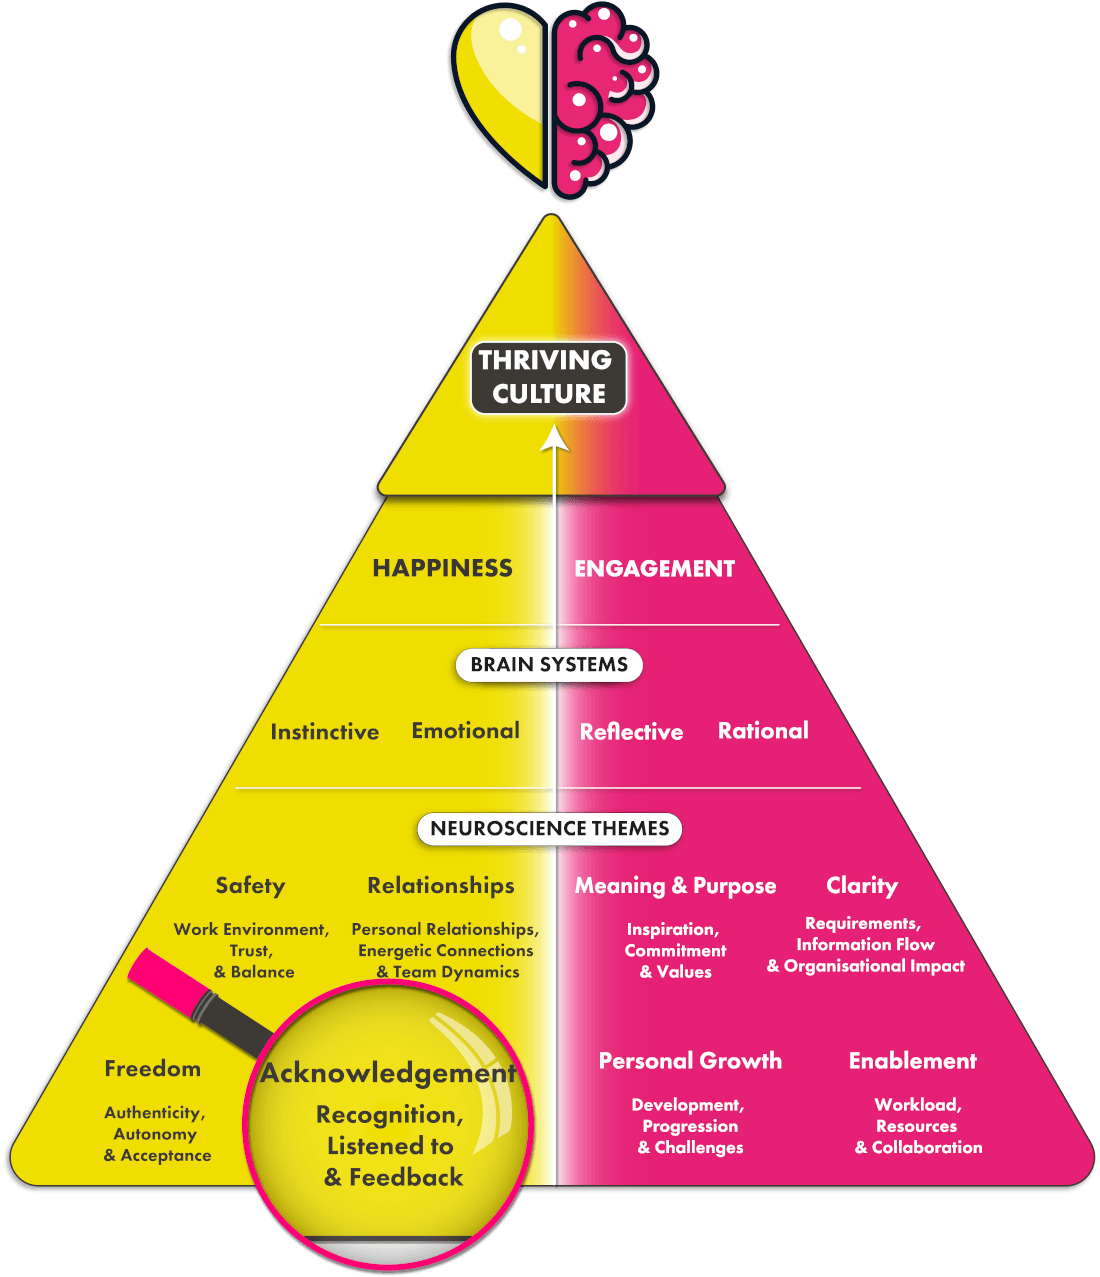 Acknowledgement neuroscience theme on pyramid diagram